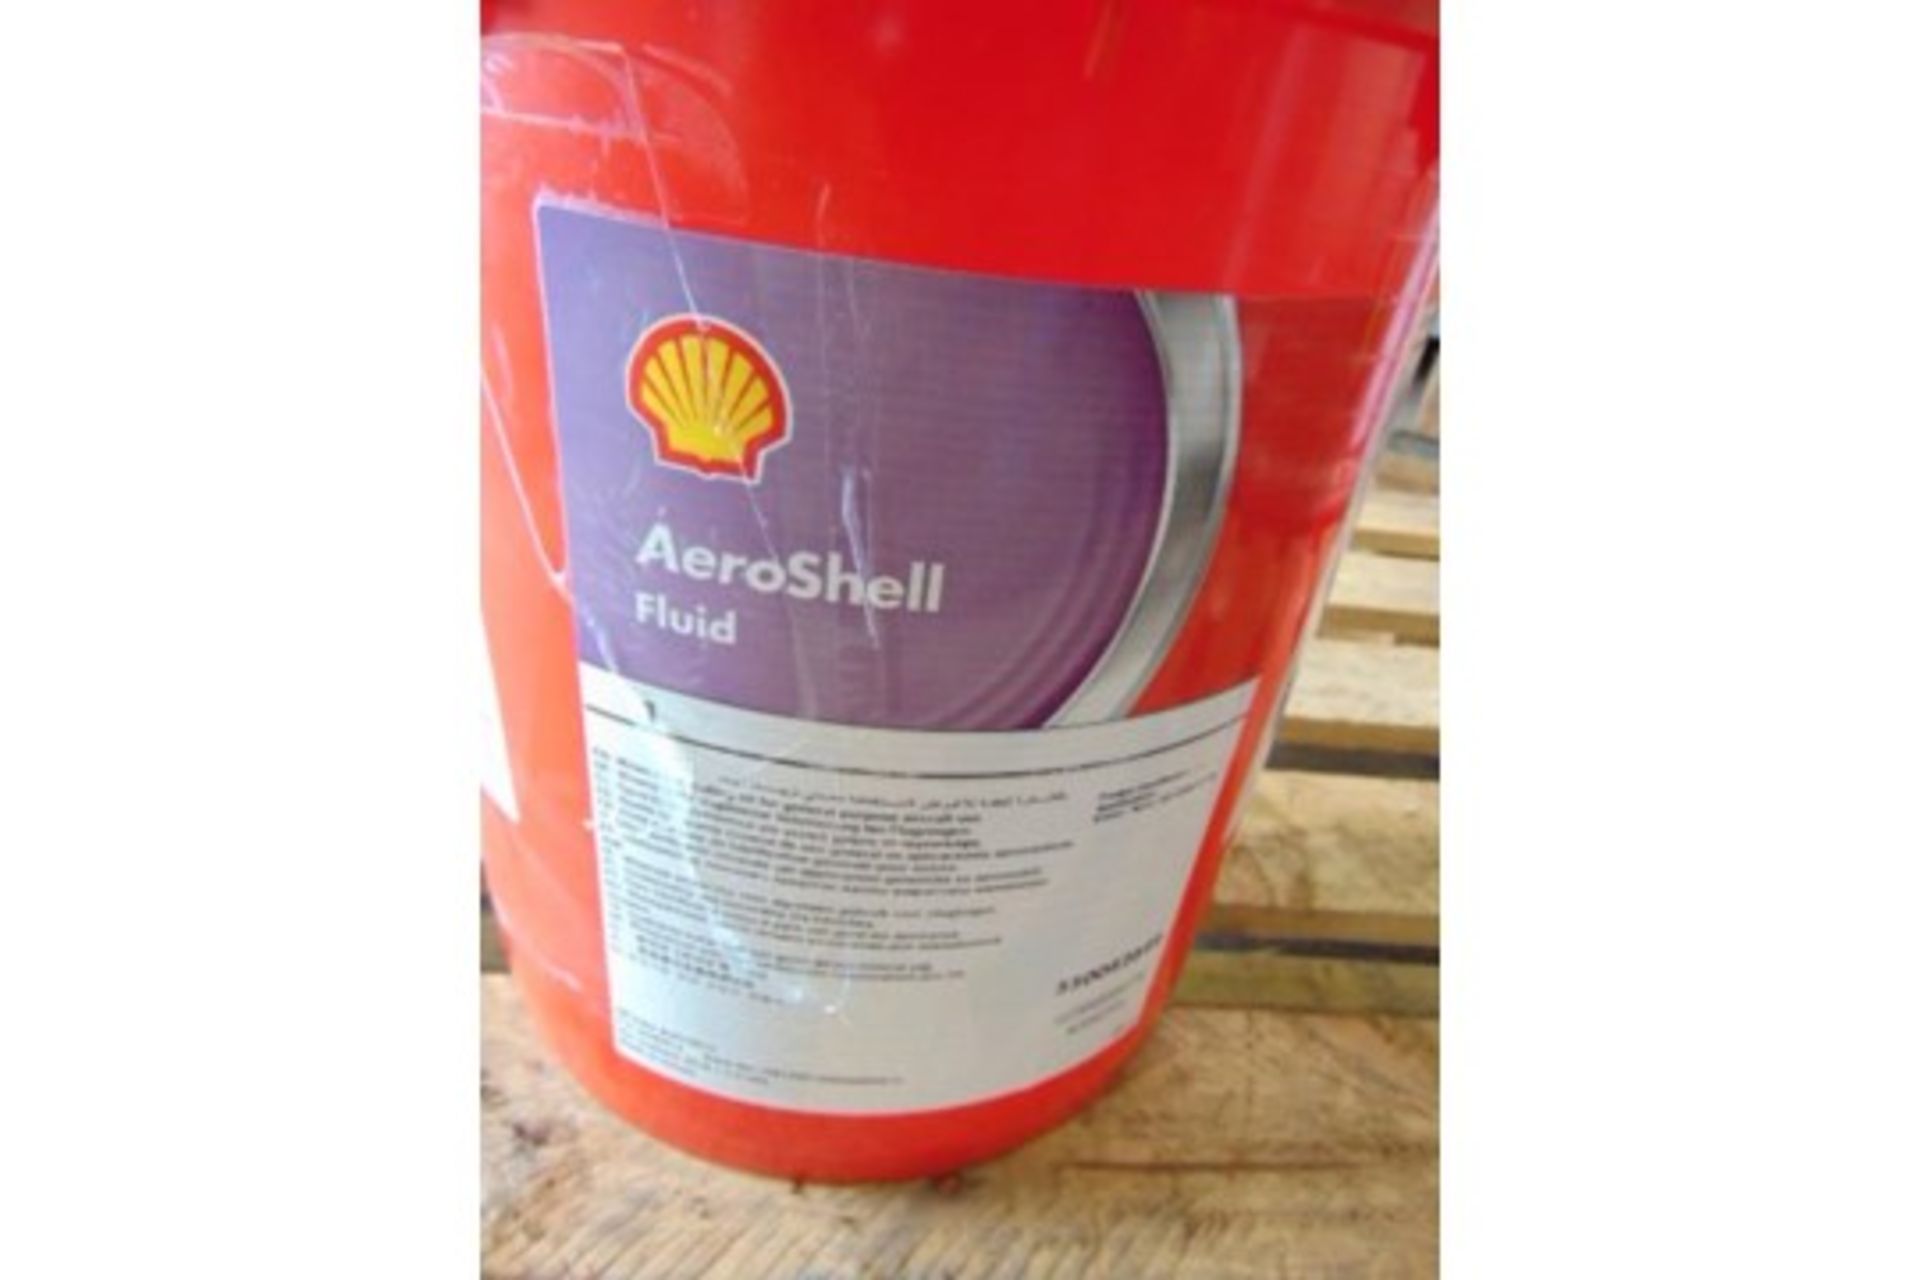 Qty 1 x 20 Ltr Shell Aeroshell Fluid - Image 2 of 2